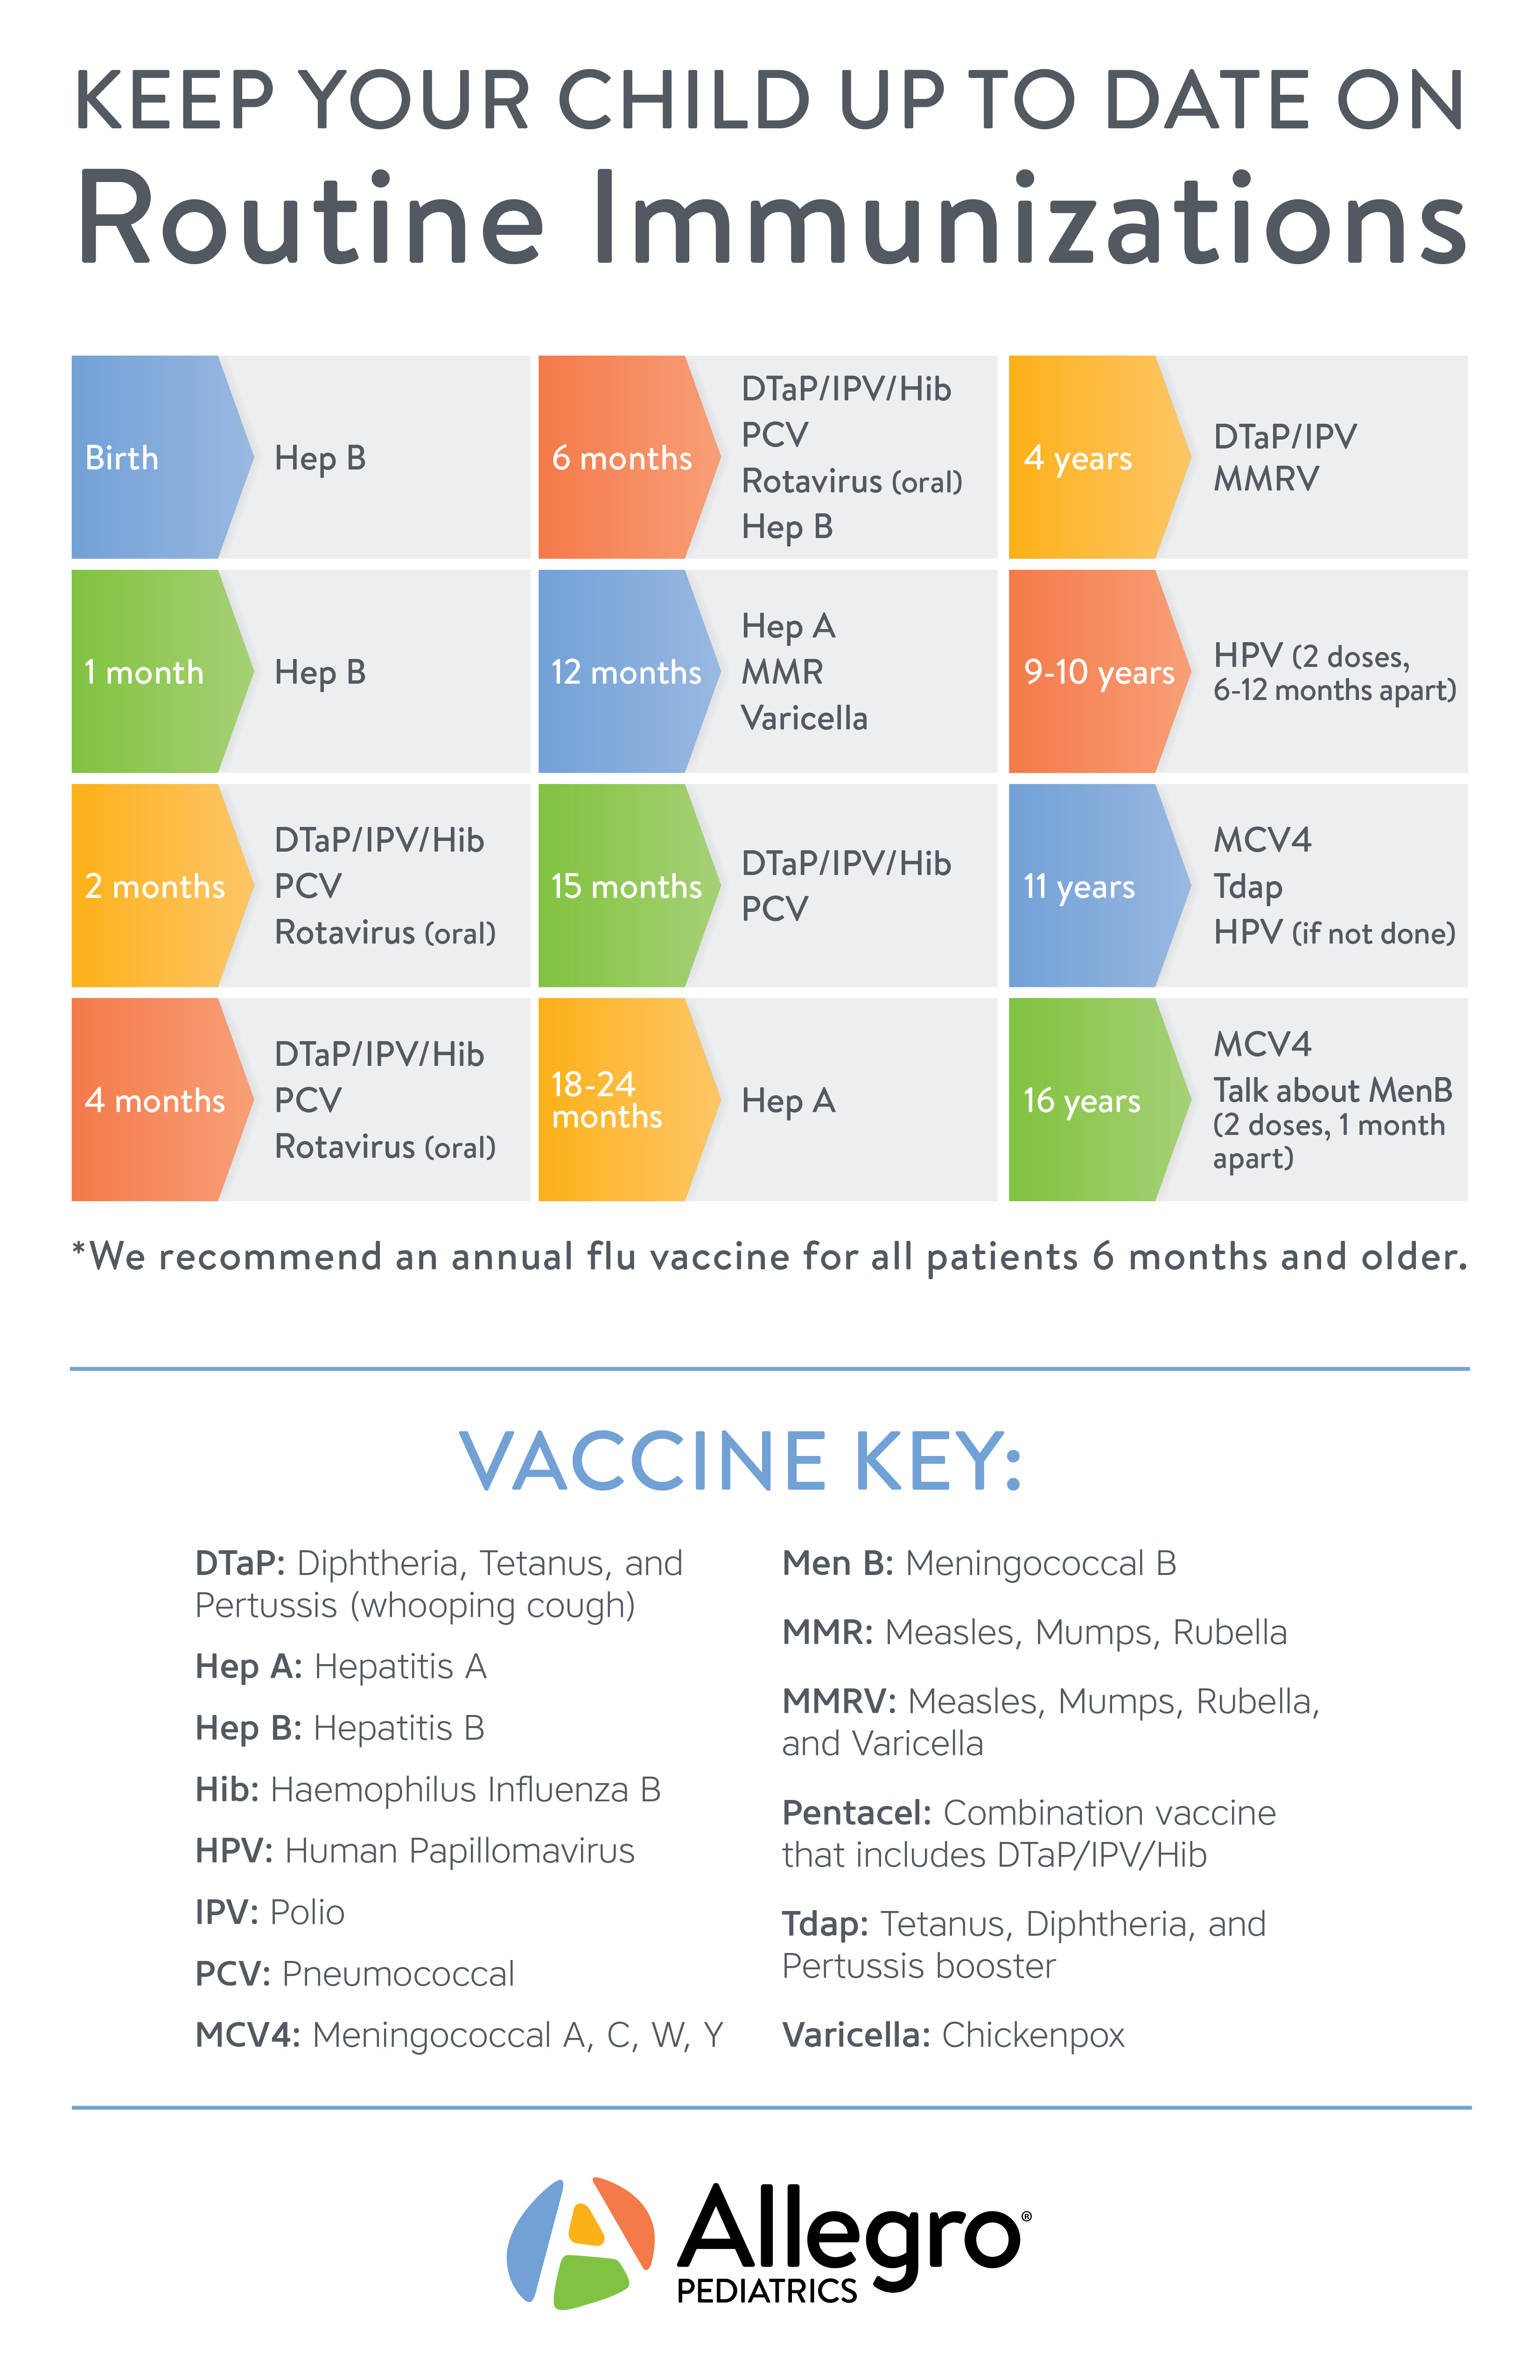 childhood-immunizations-allegro-pediatrics